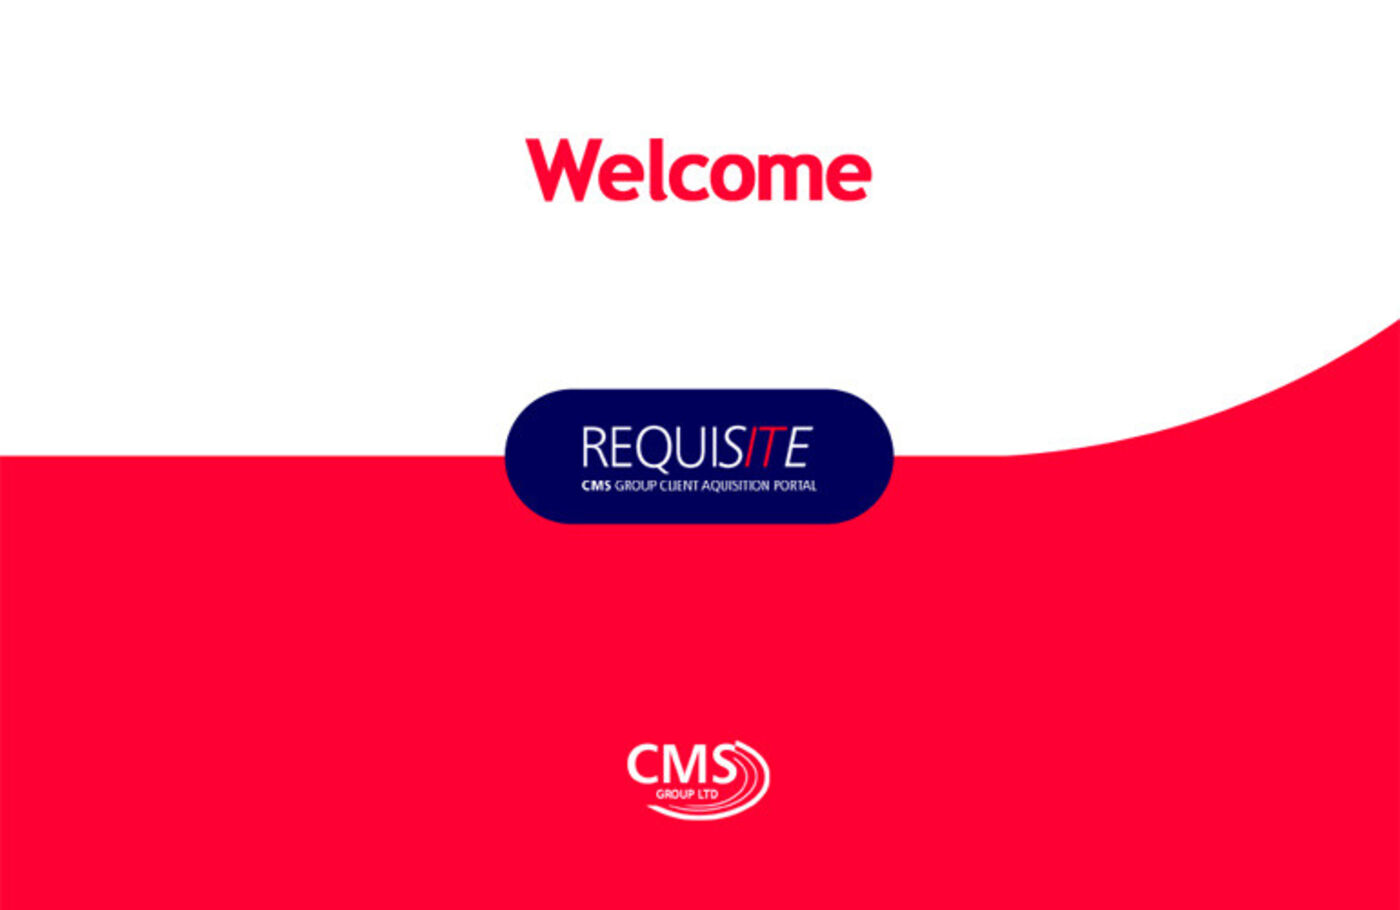 CMS Group Ltd Welcome